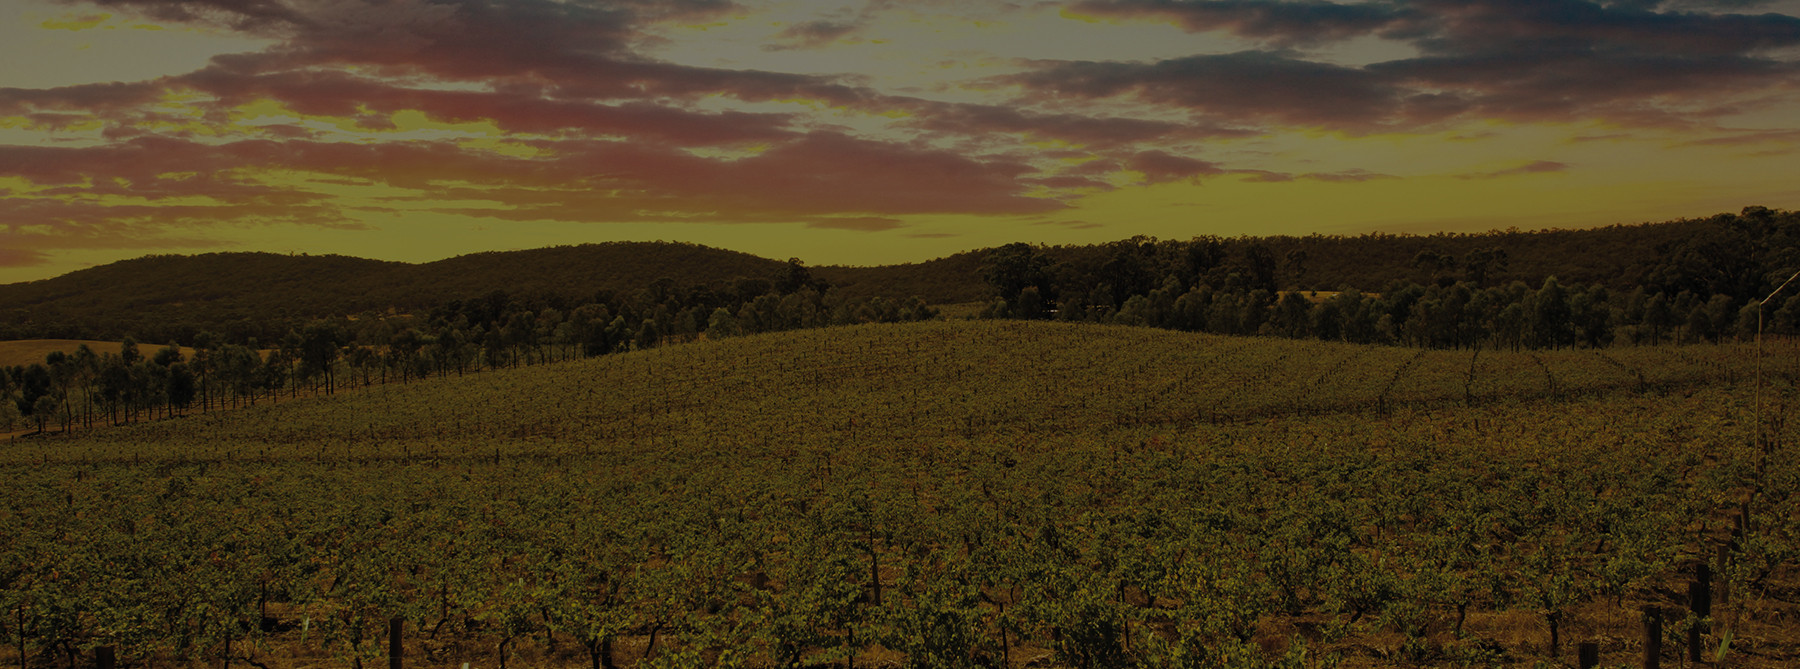 The australian vineyard